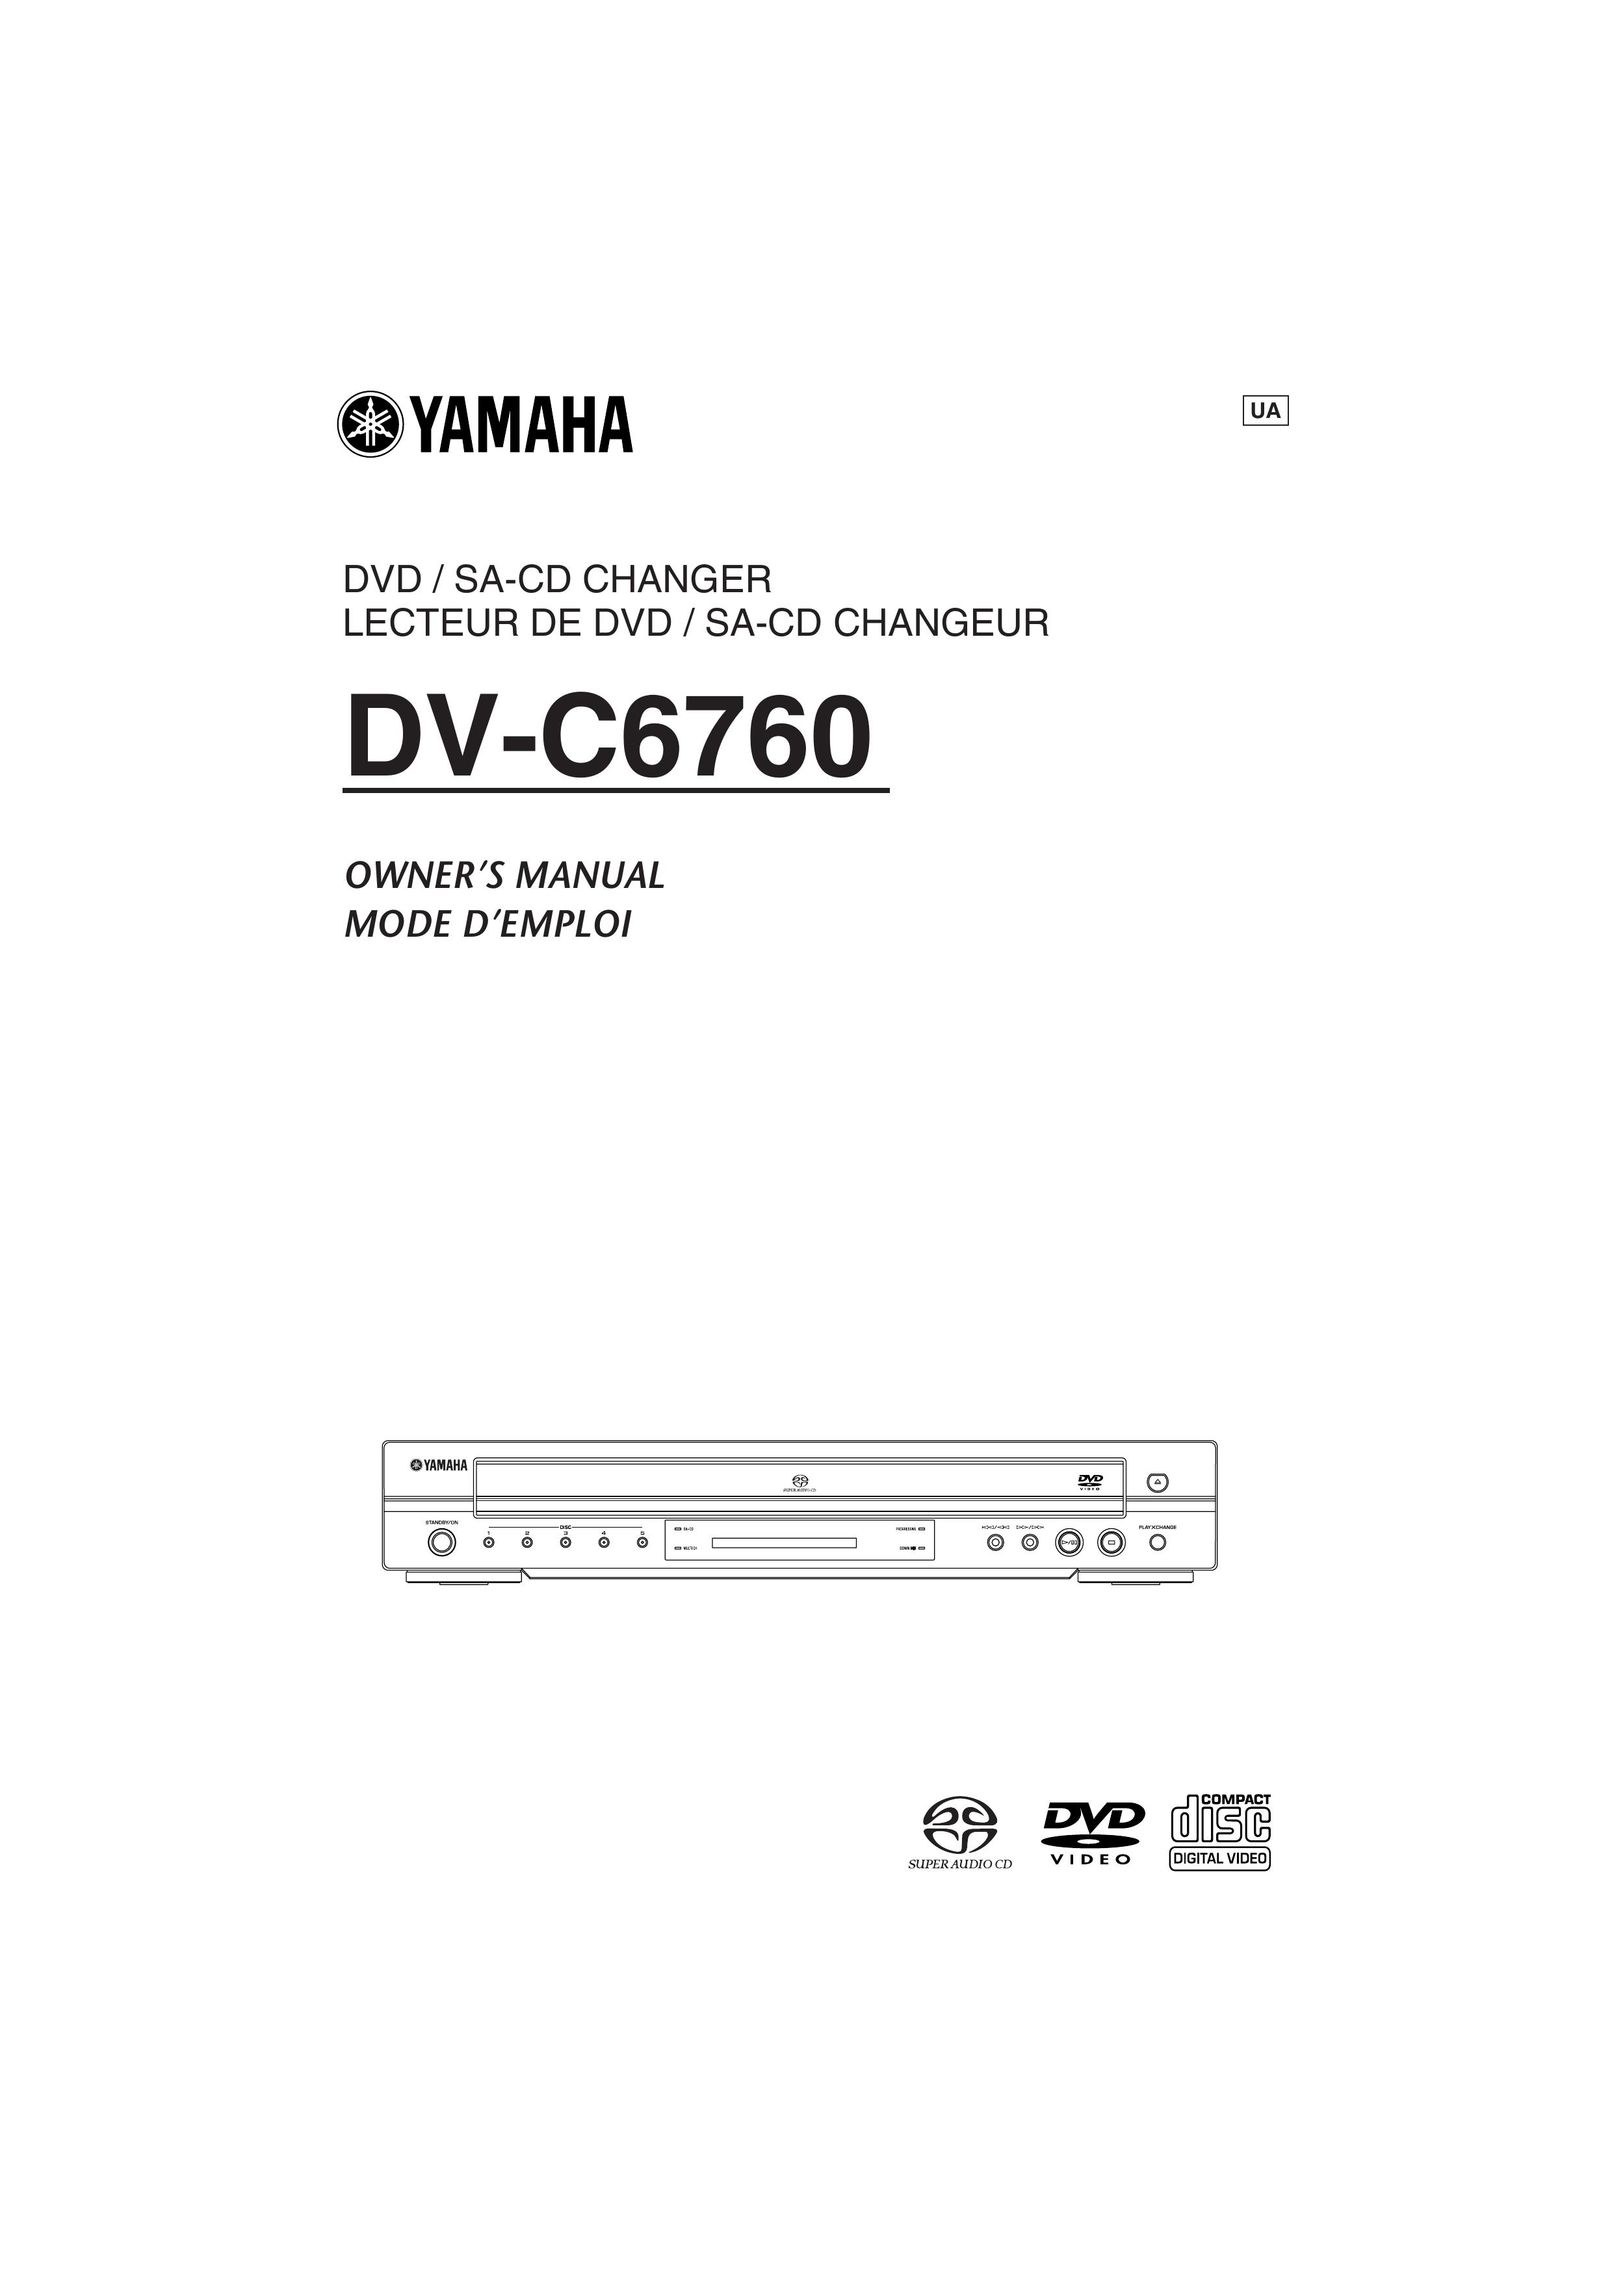 Yamaha DV-C6760 DVD Player User Manual